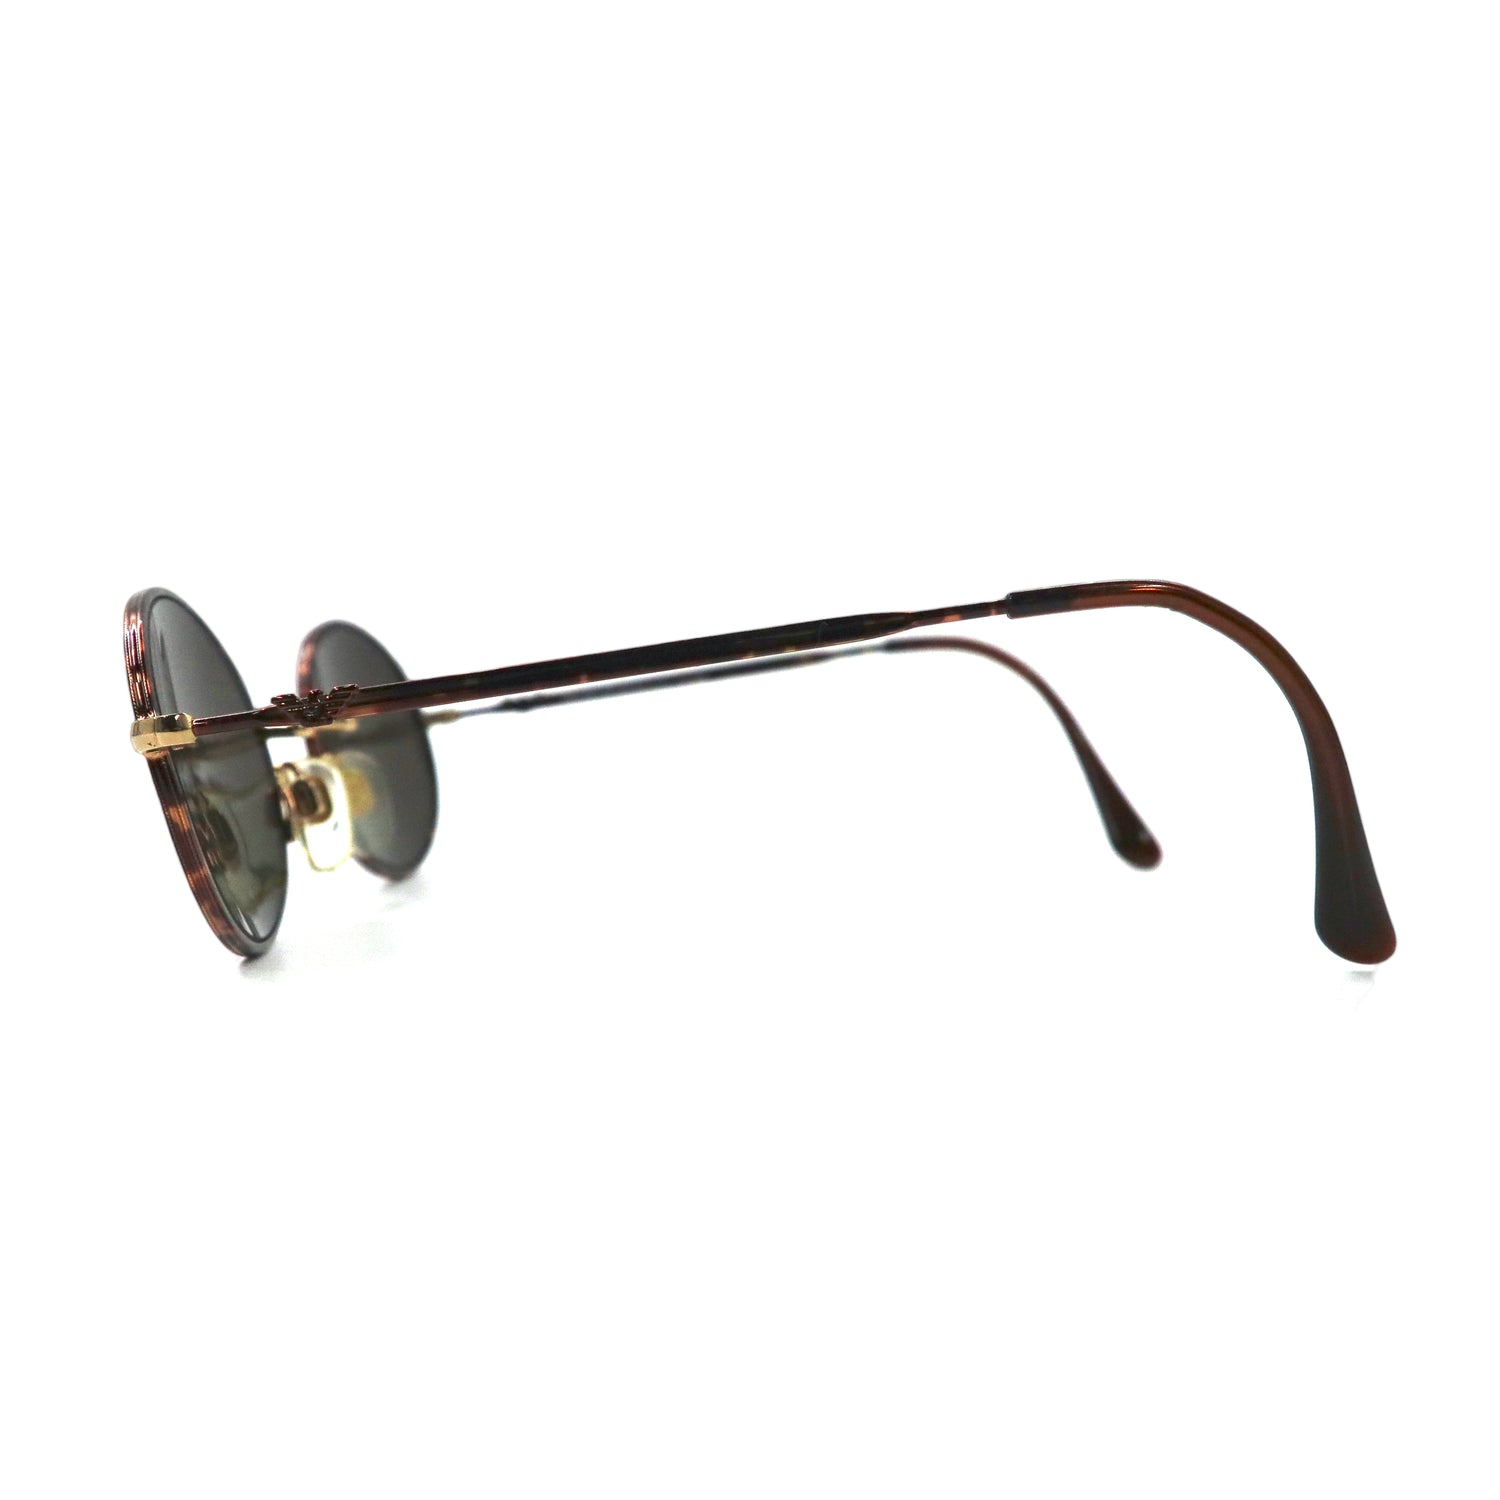 EMPORIO ARMANI Sunglasses Oval Beckou 002 721 140 Italian Made 